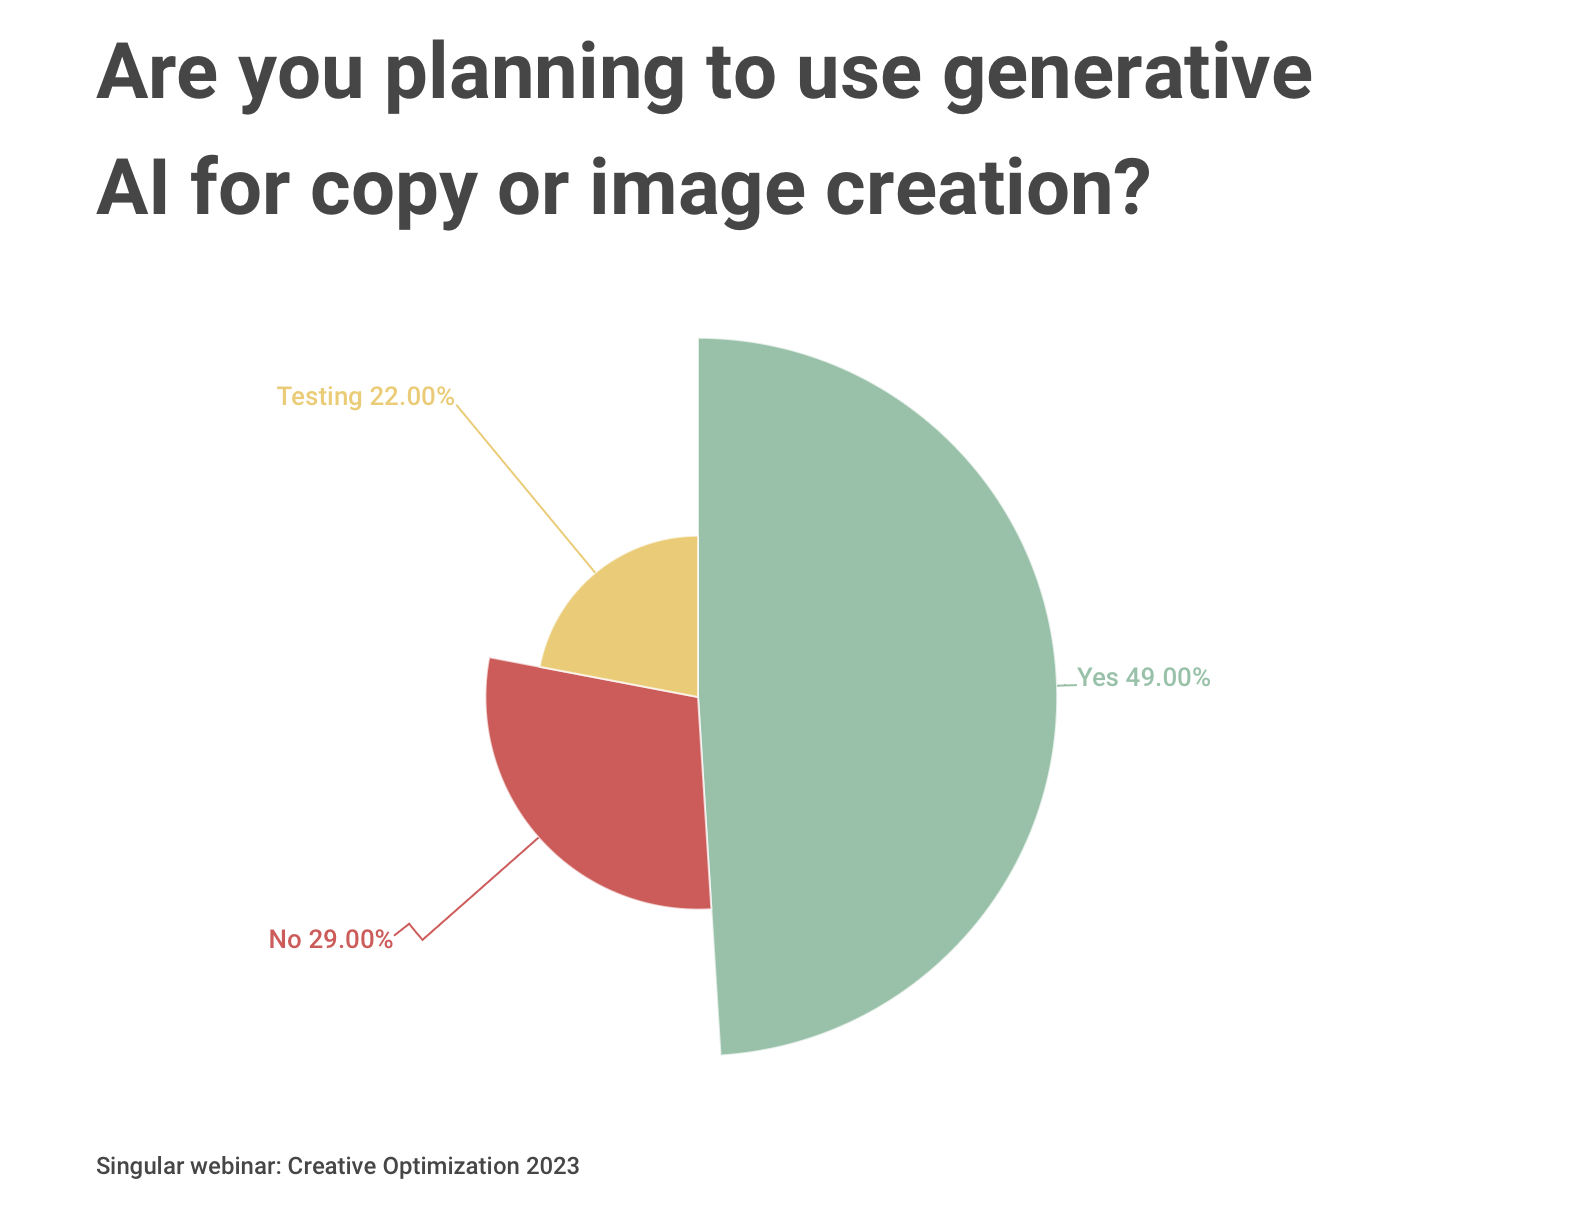 Creative optimization poll 2